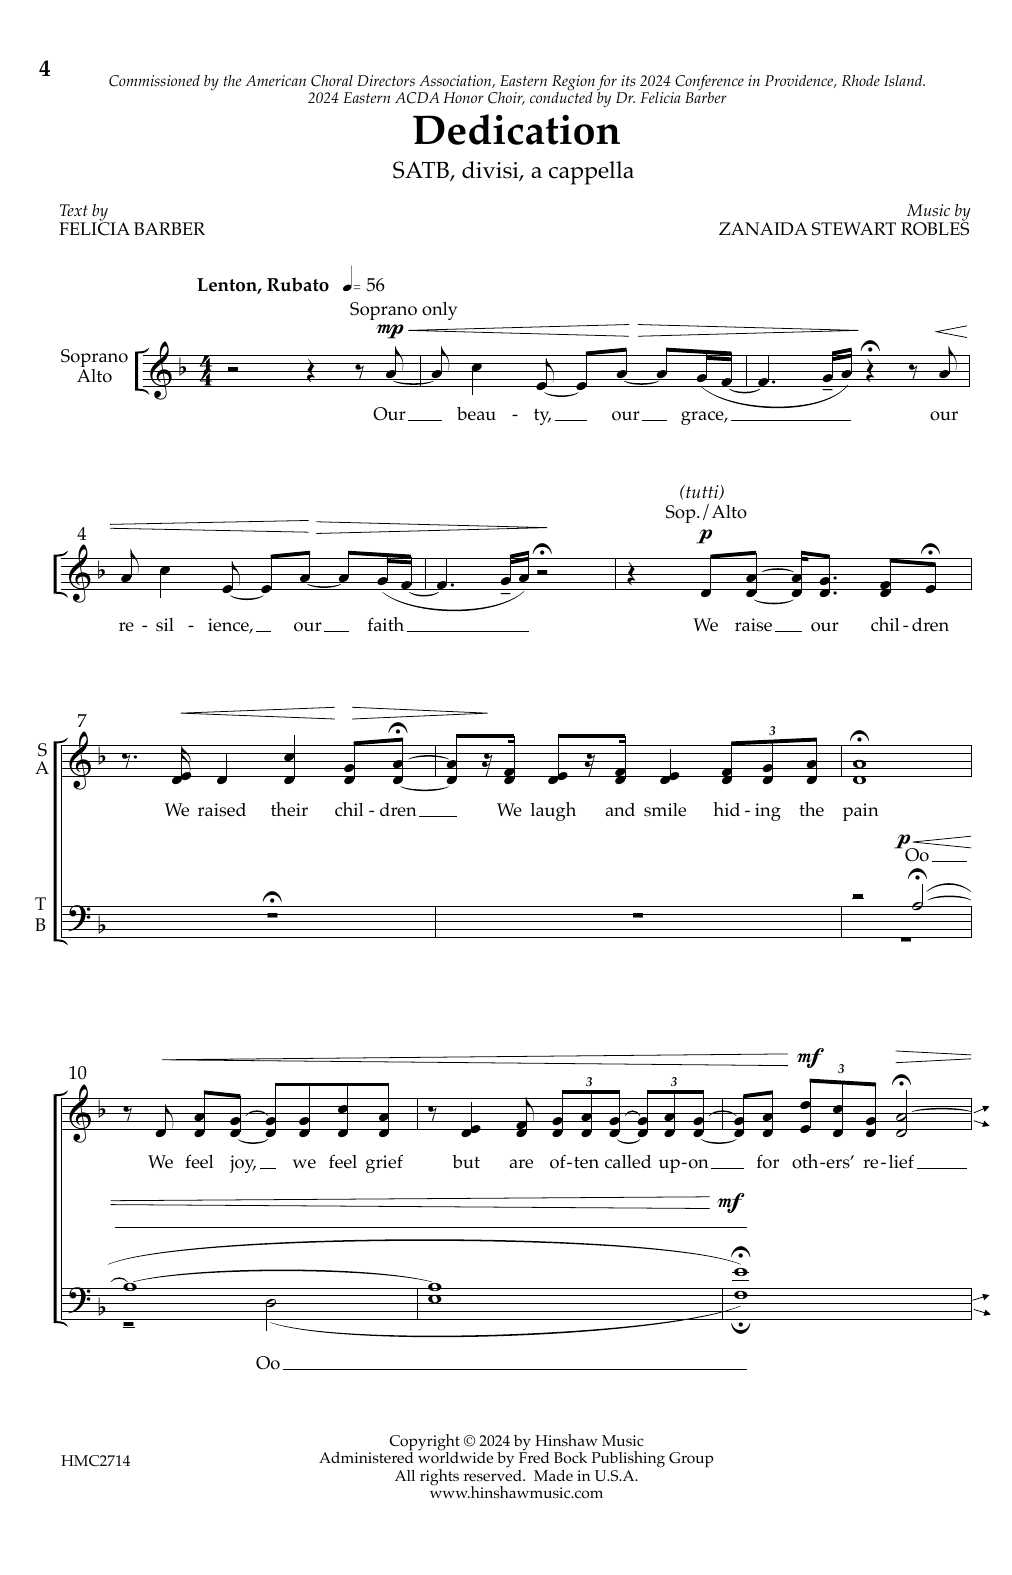 Zanaida Stewart Robles Dedication Sheet Music Notes & Chords for Choir - Download or Print PDF